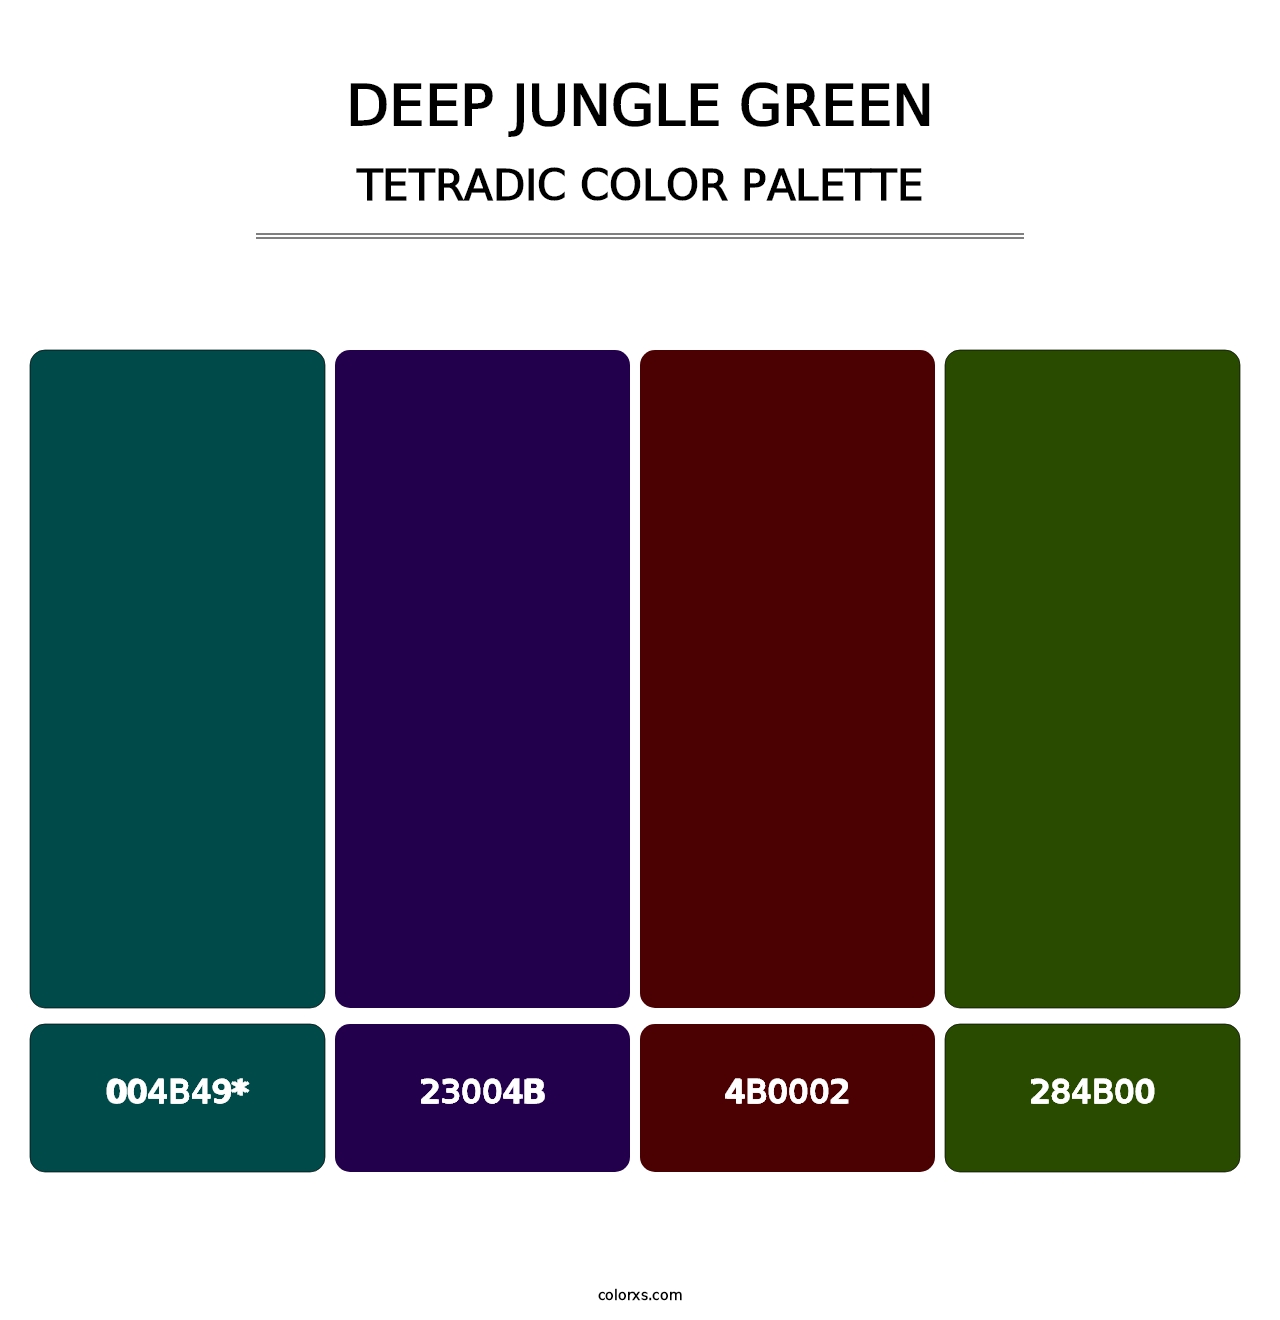 Deep Jungle Green - Tetradic Color Palette